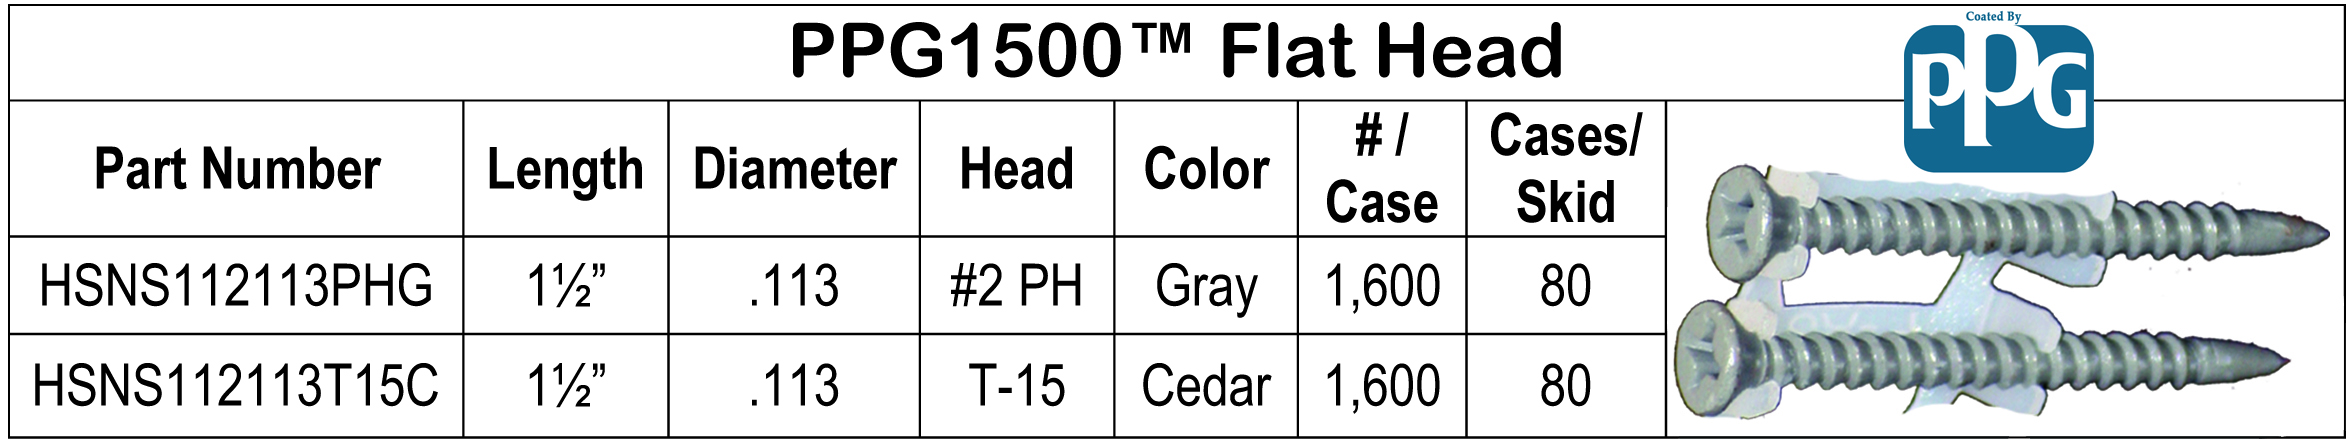 PPG1500 Plastic Coil Gray Flat Head